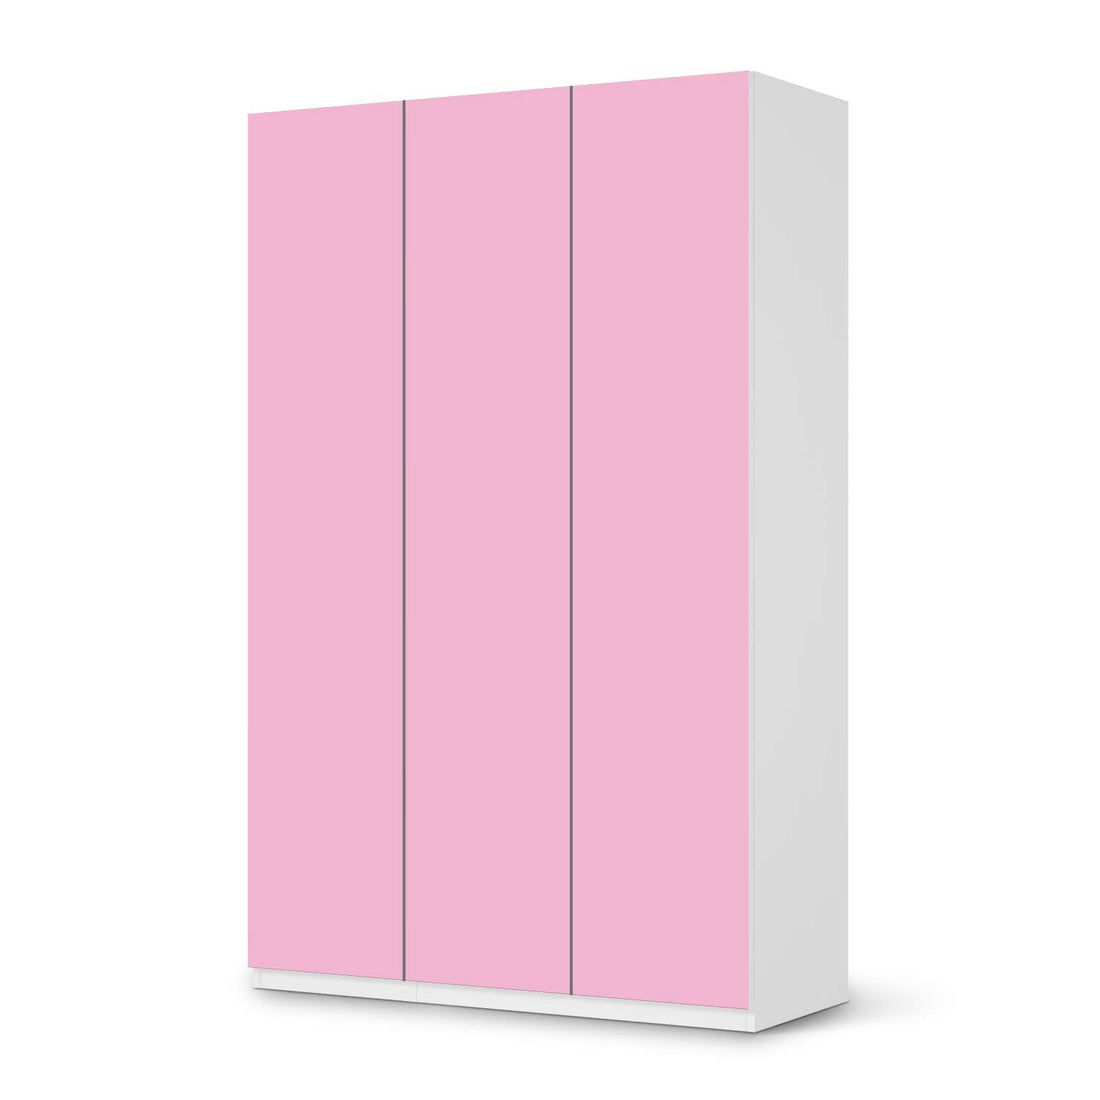 Selbstklebende Folie Pink Light - IKEA Pax Schrank 236 cm Höhe - 3 Türen - weiss